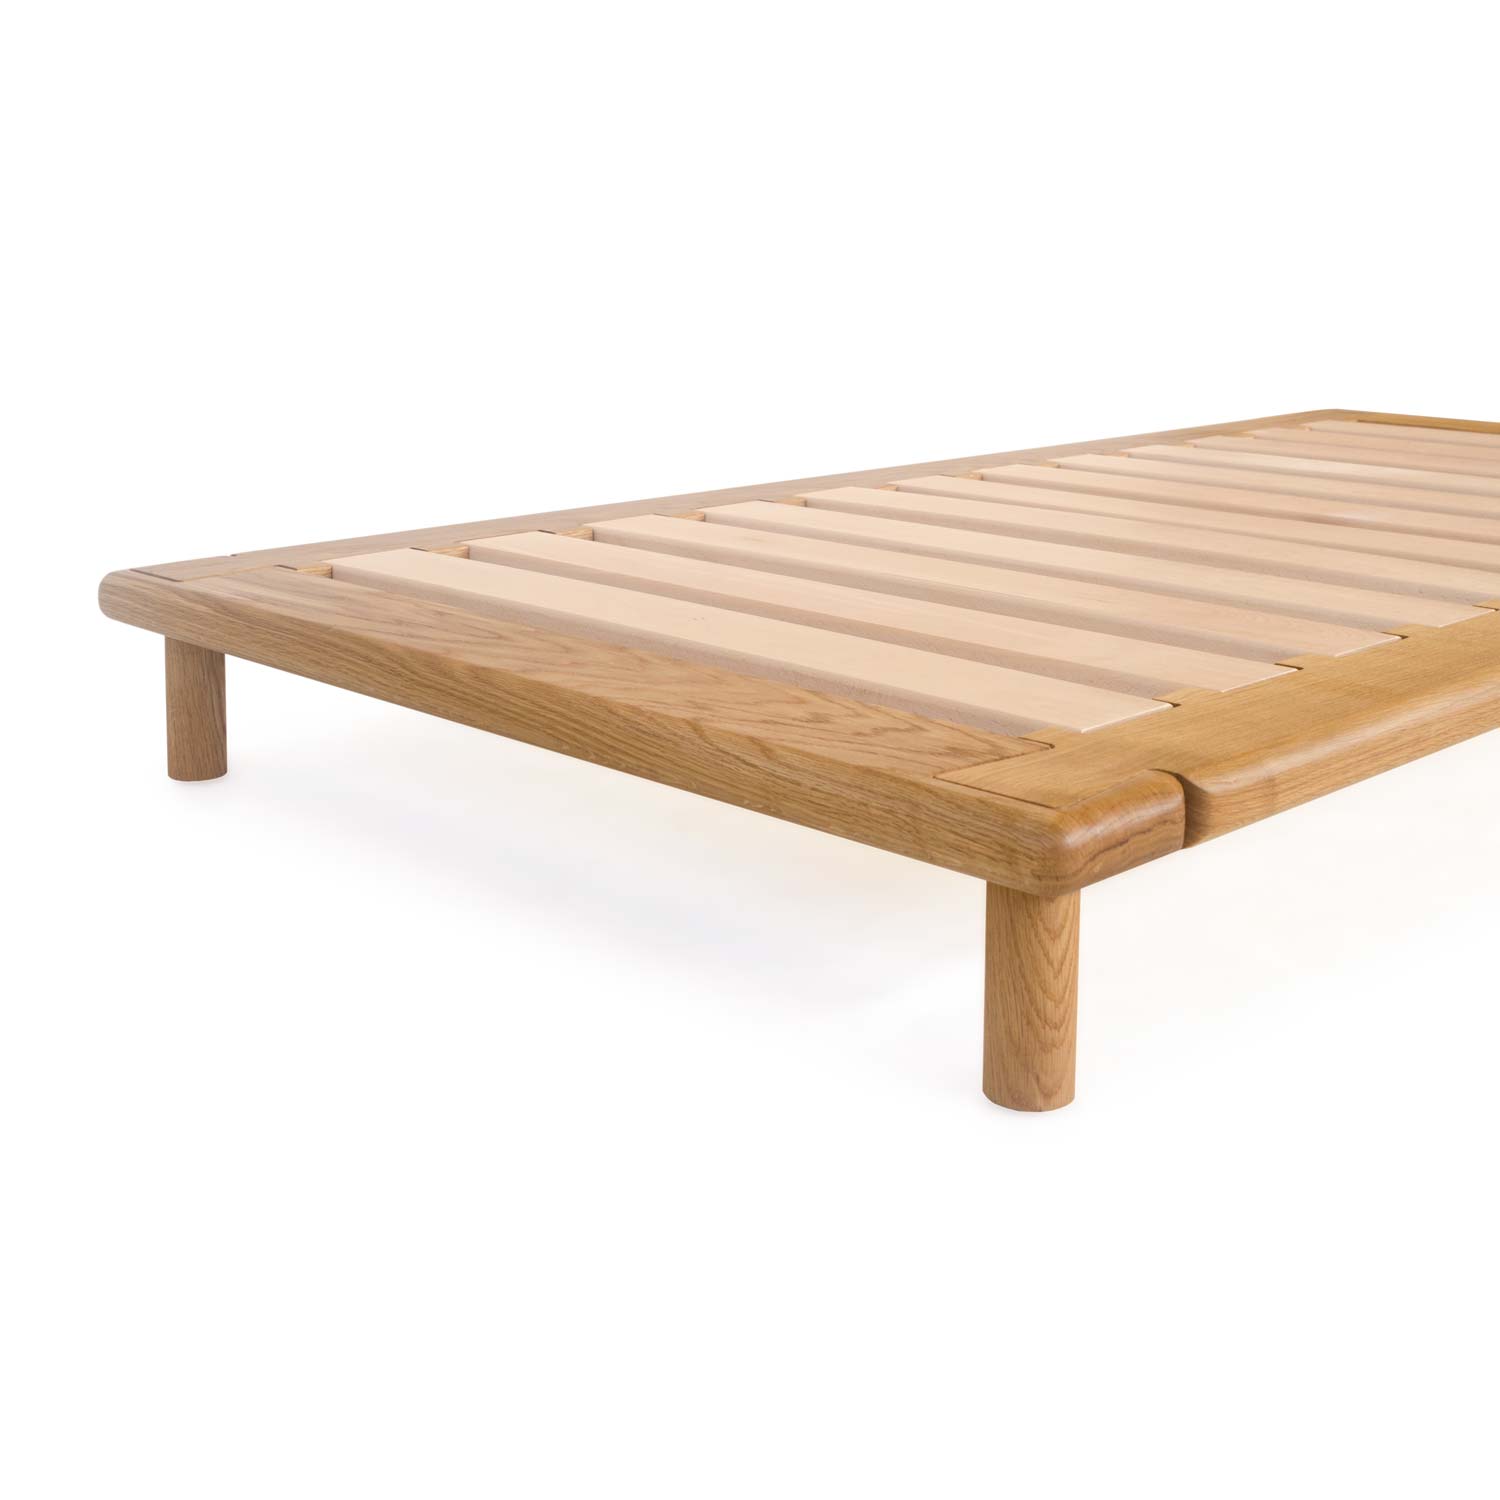 Oak Platform Bed Without A Headboard, Platform Bed With Storage No Headboard